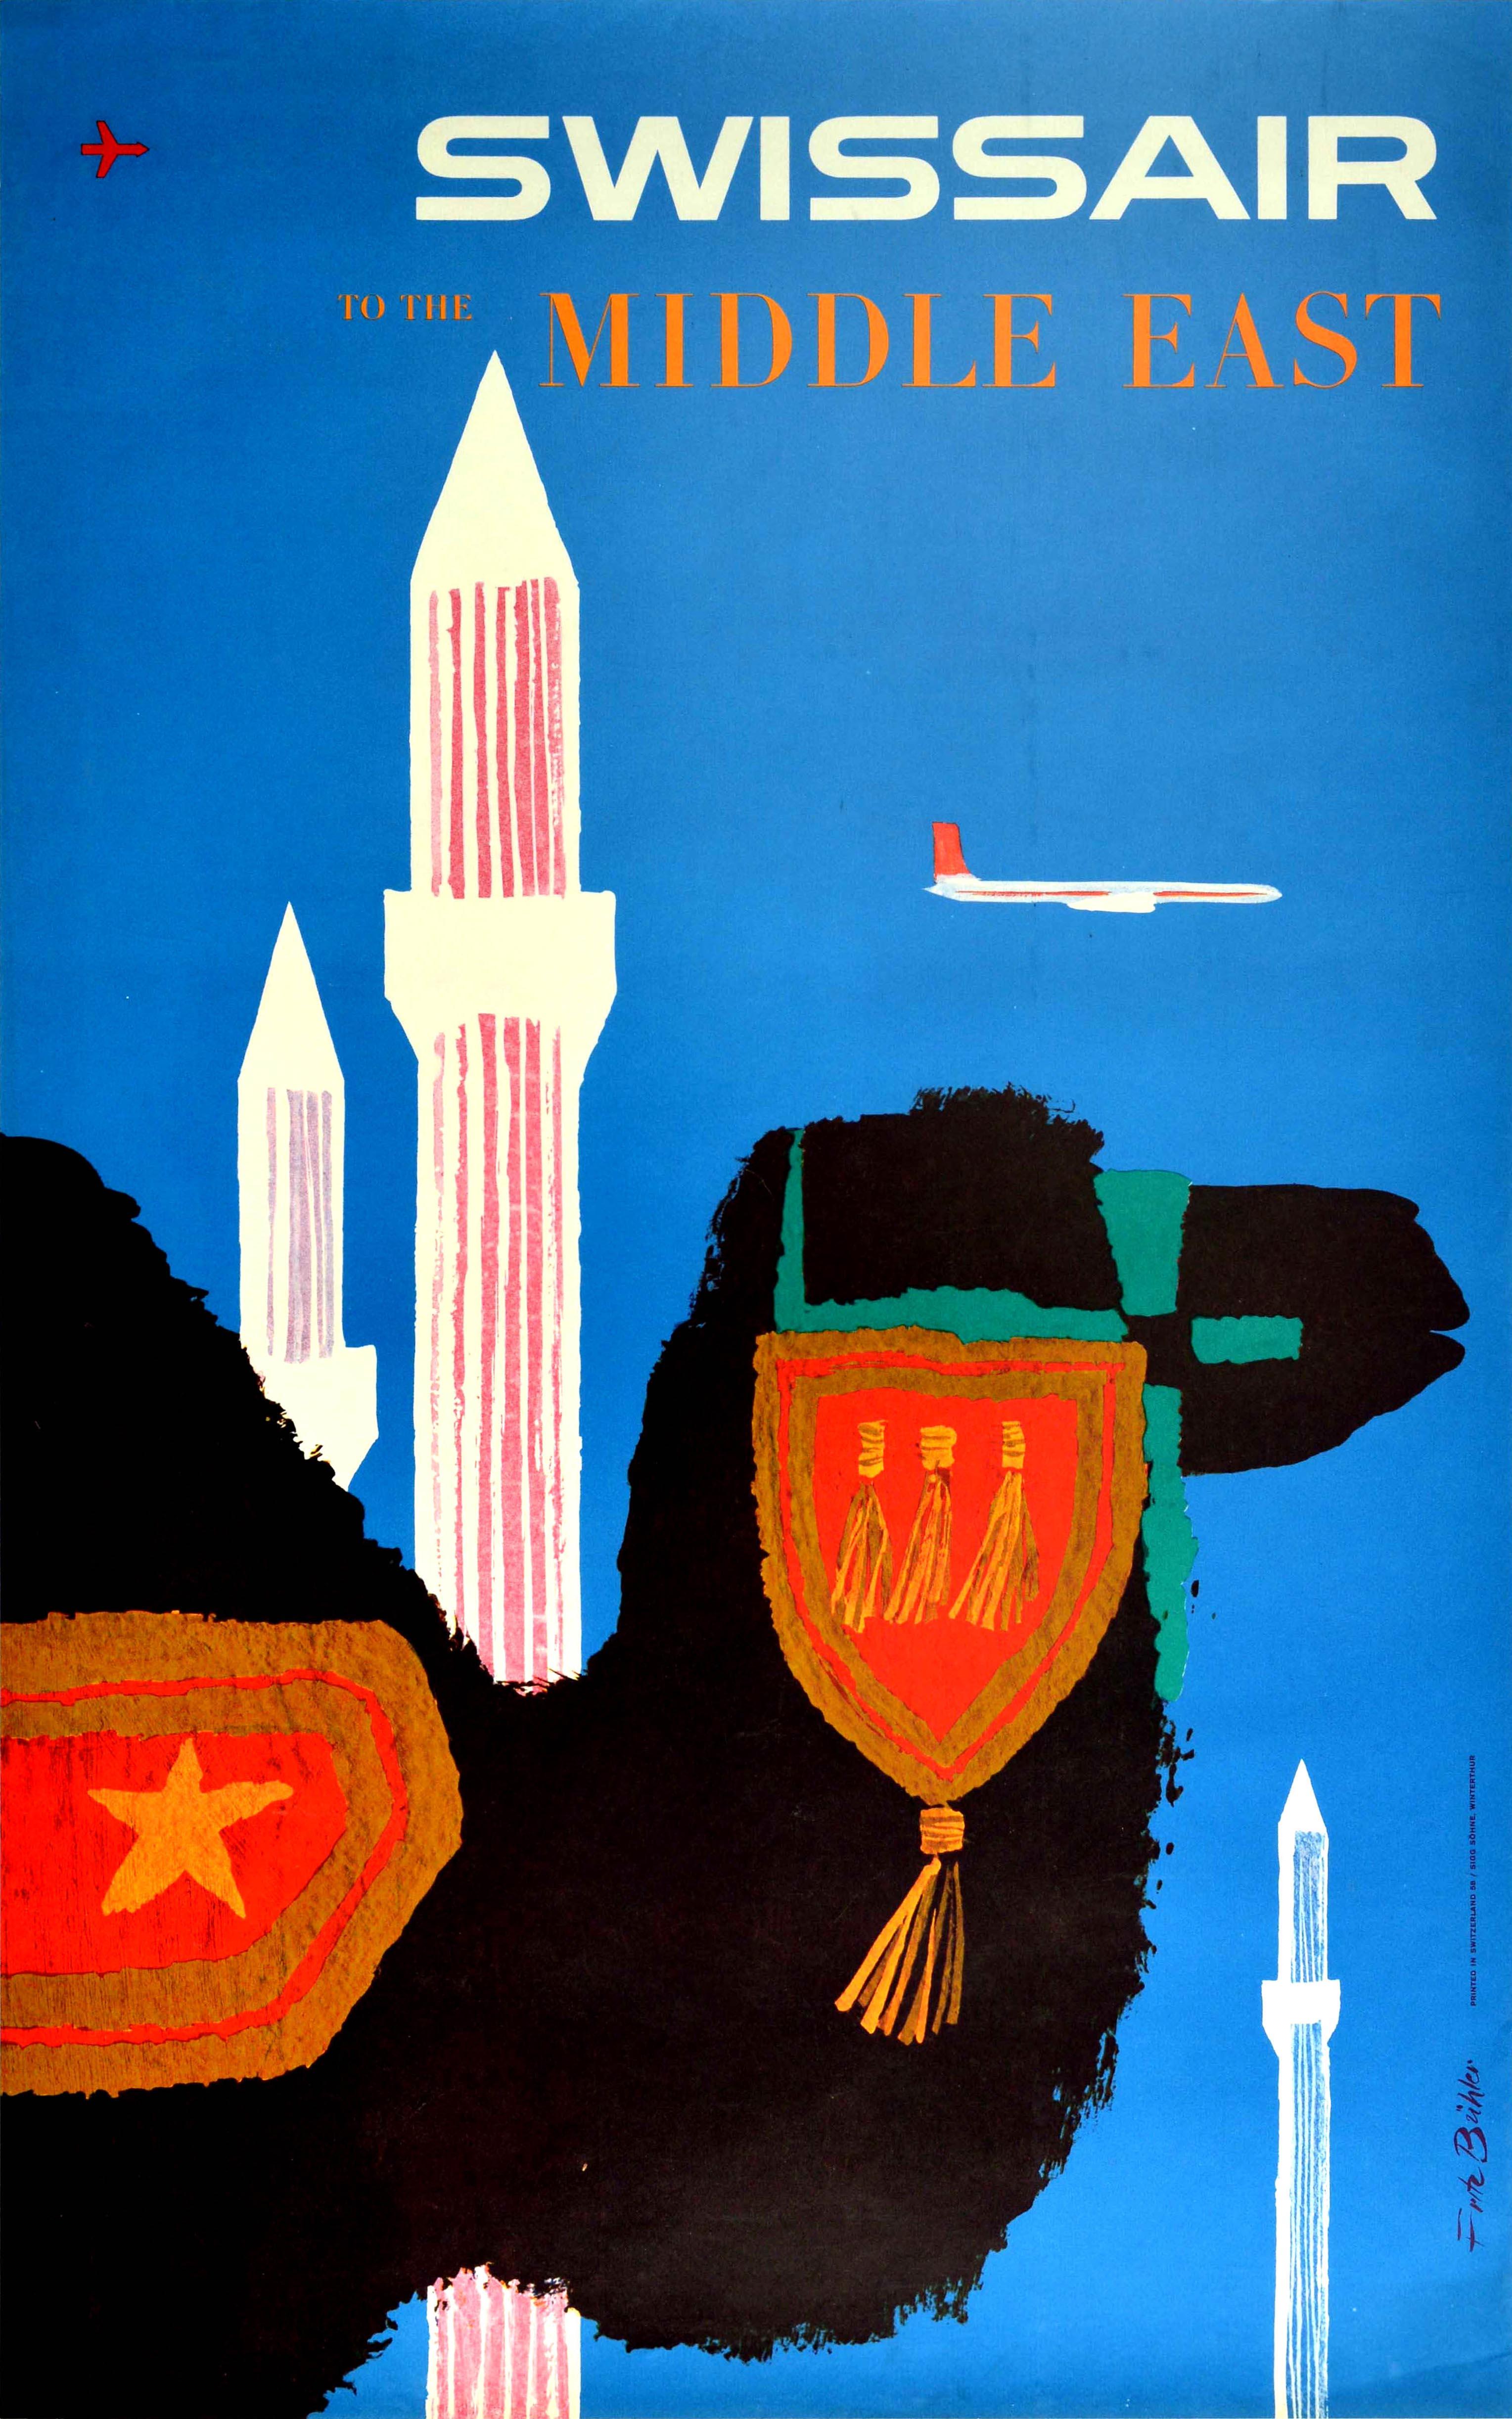 Fritz Bühler Print - Original Vintage Poster Swissair To The Middle East Airline Travel Plane Camel